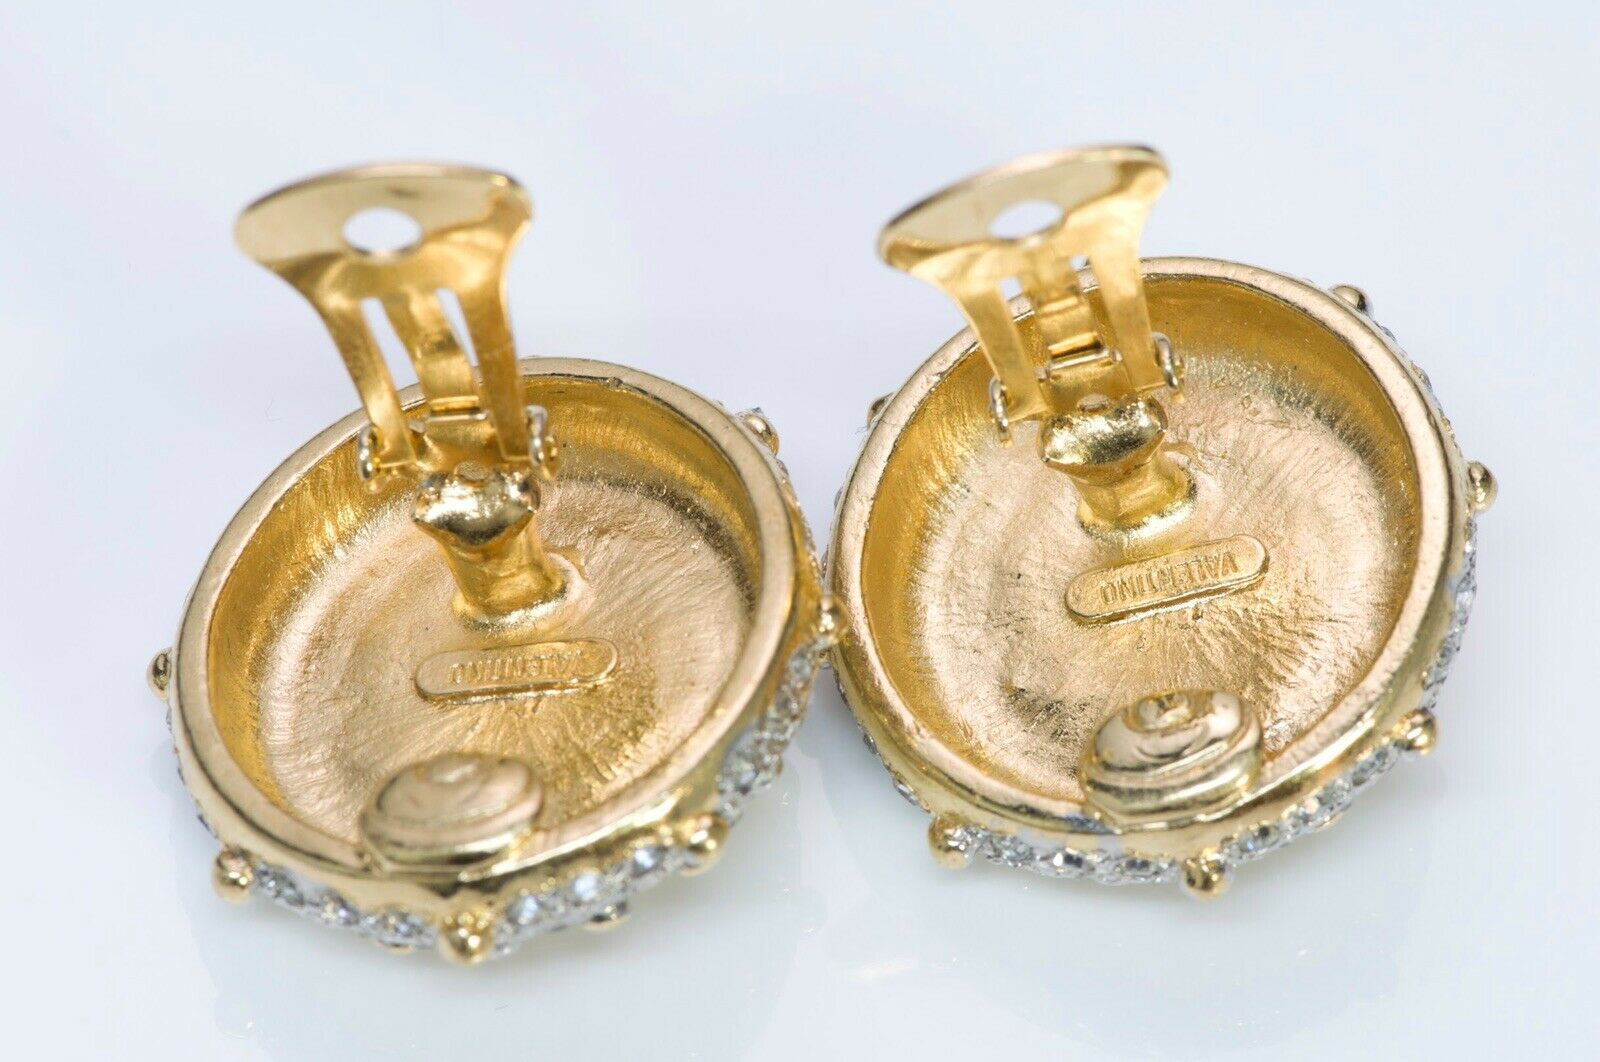 Valentino Garavani Pearl Crystal Earrings